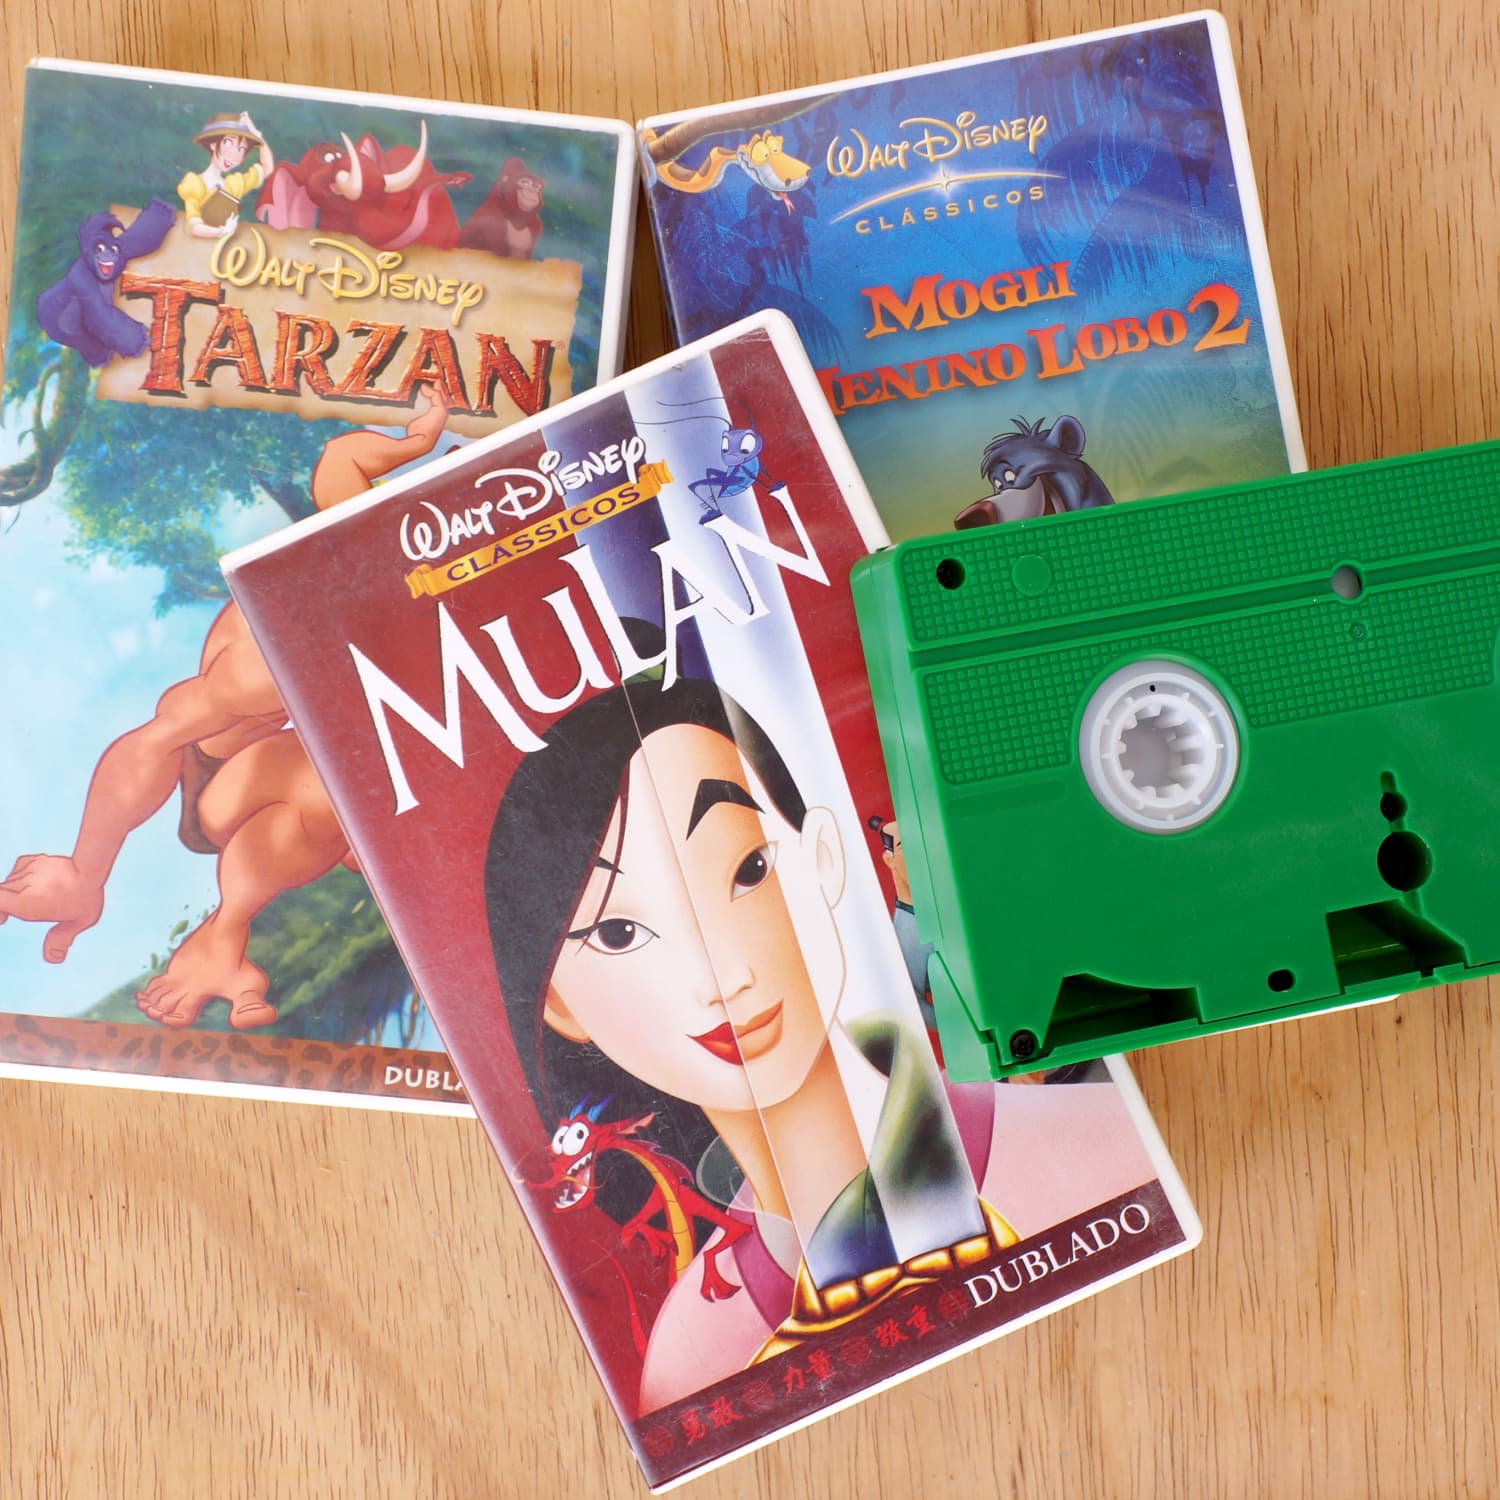 Filme Vhs Tarzan Desenho - Dublado